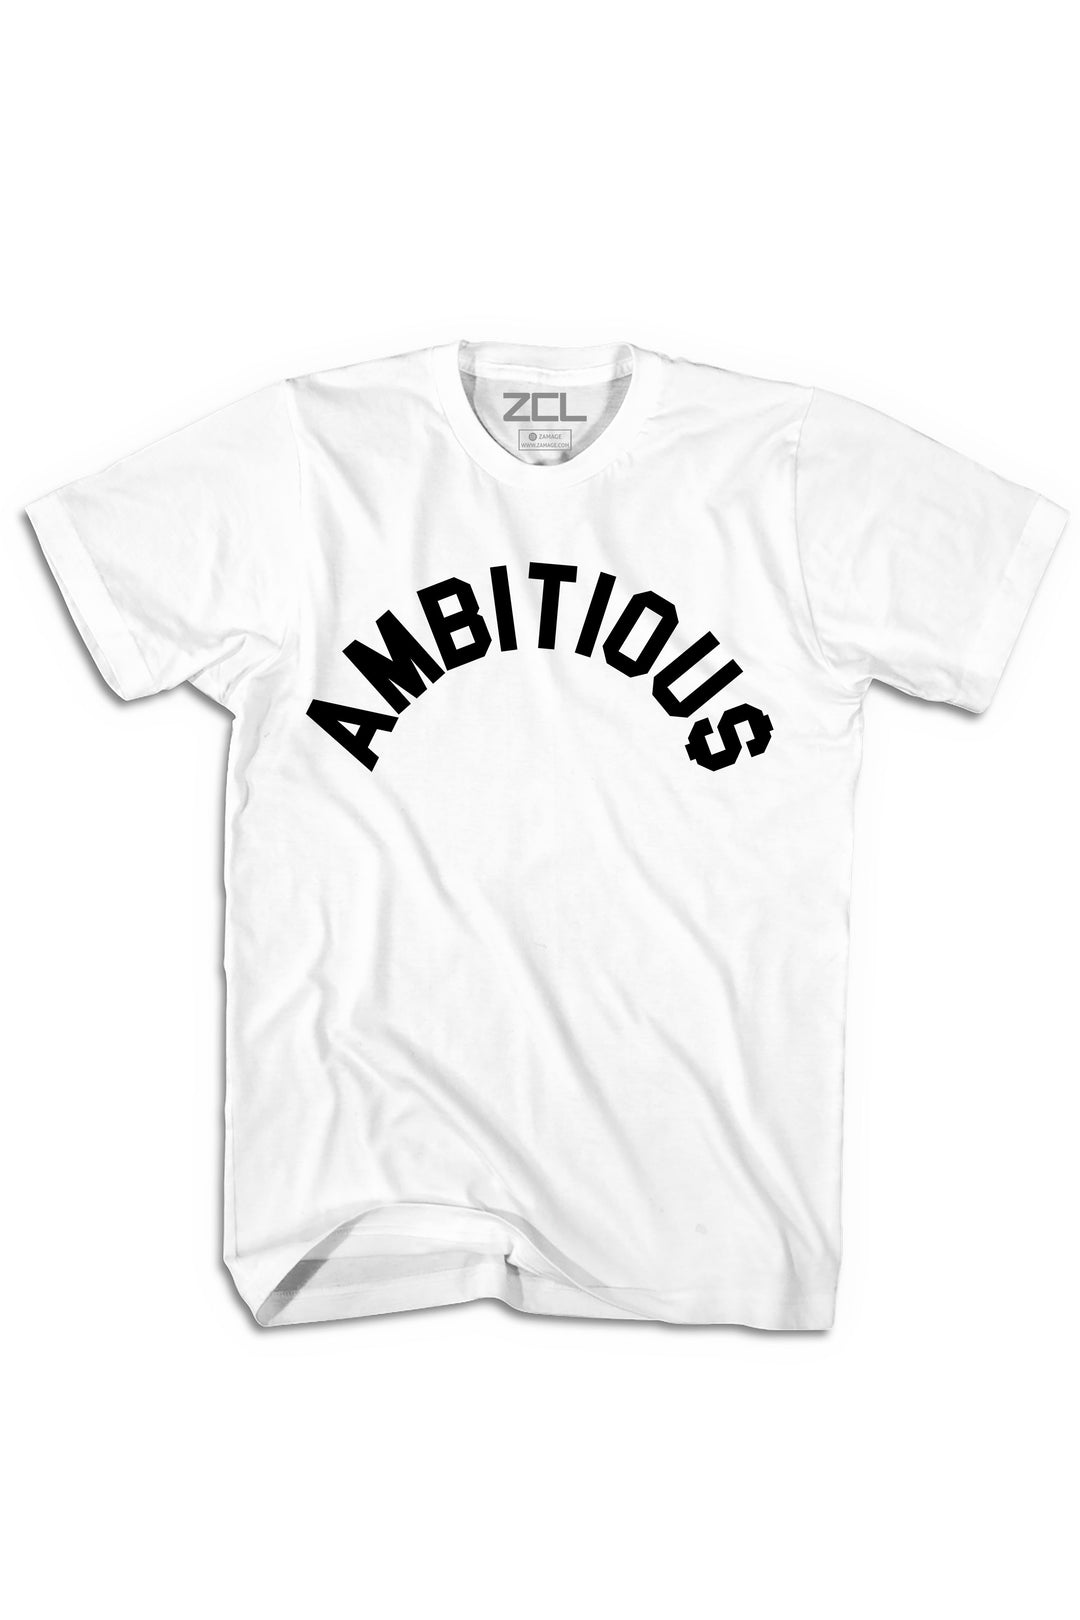 Ambitious Tee (Black Logo) - Zamage